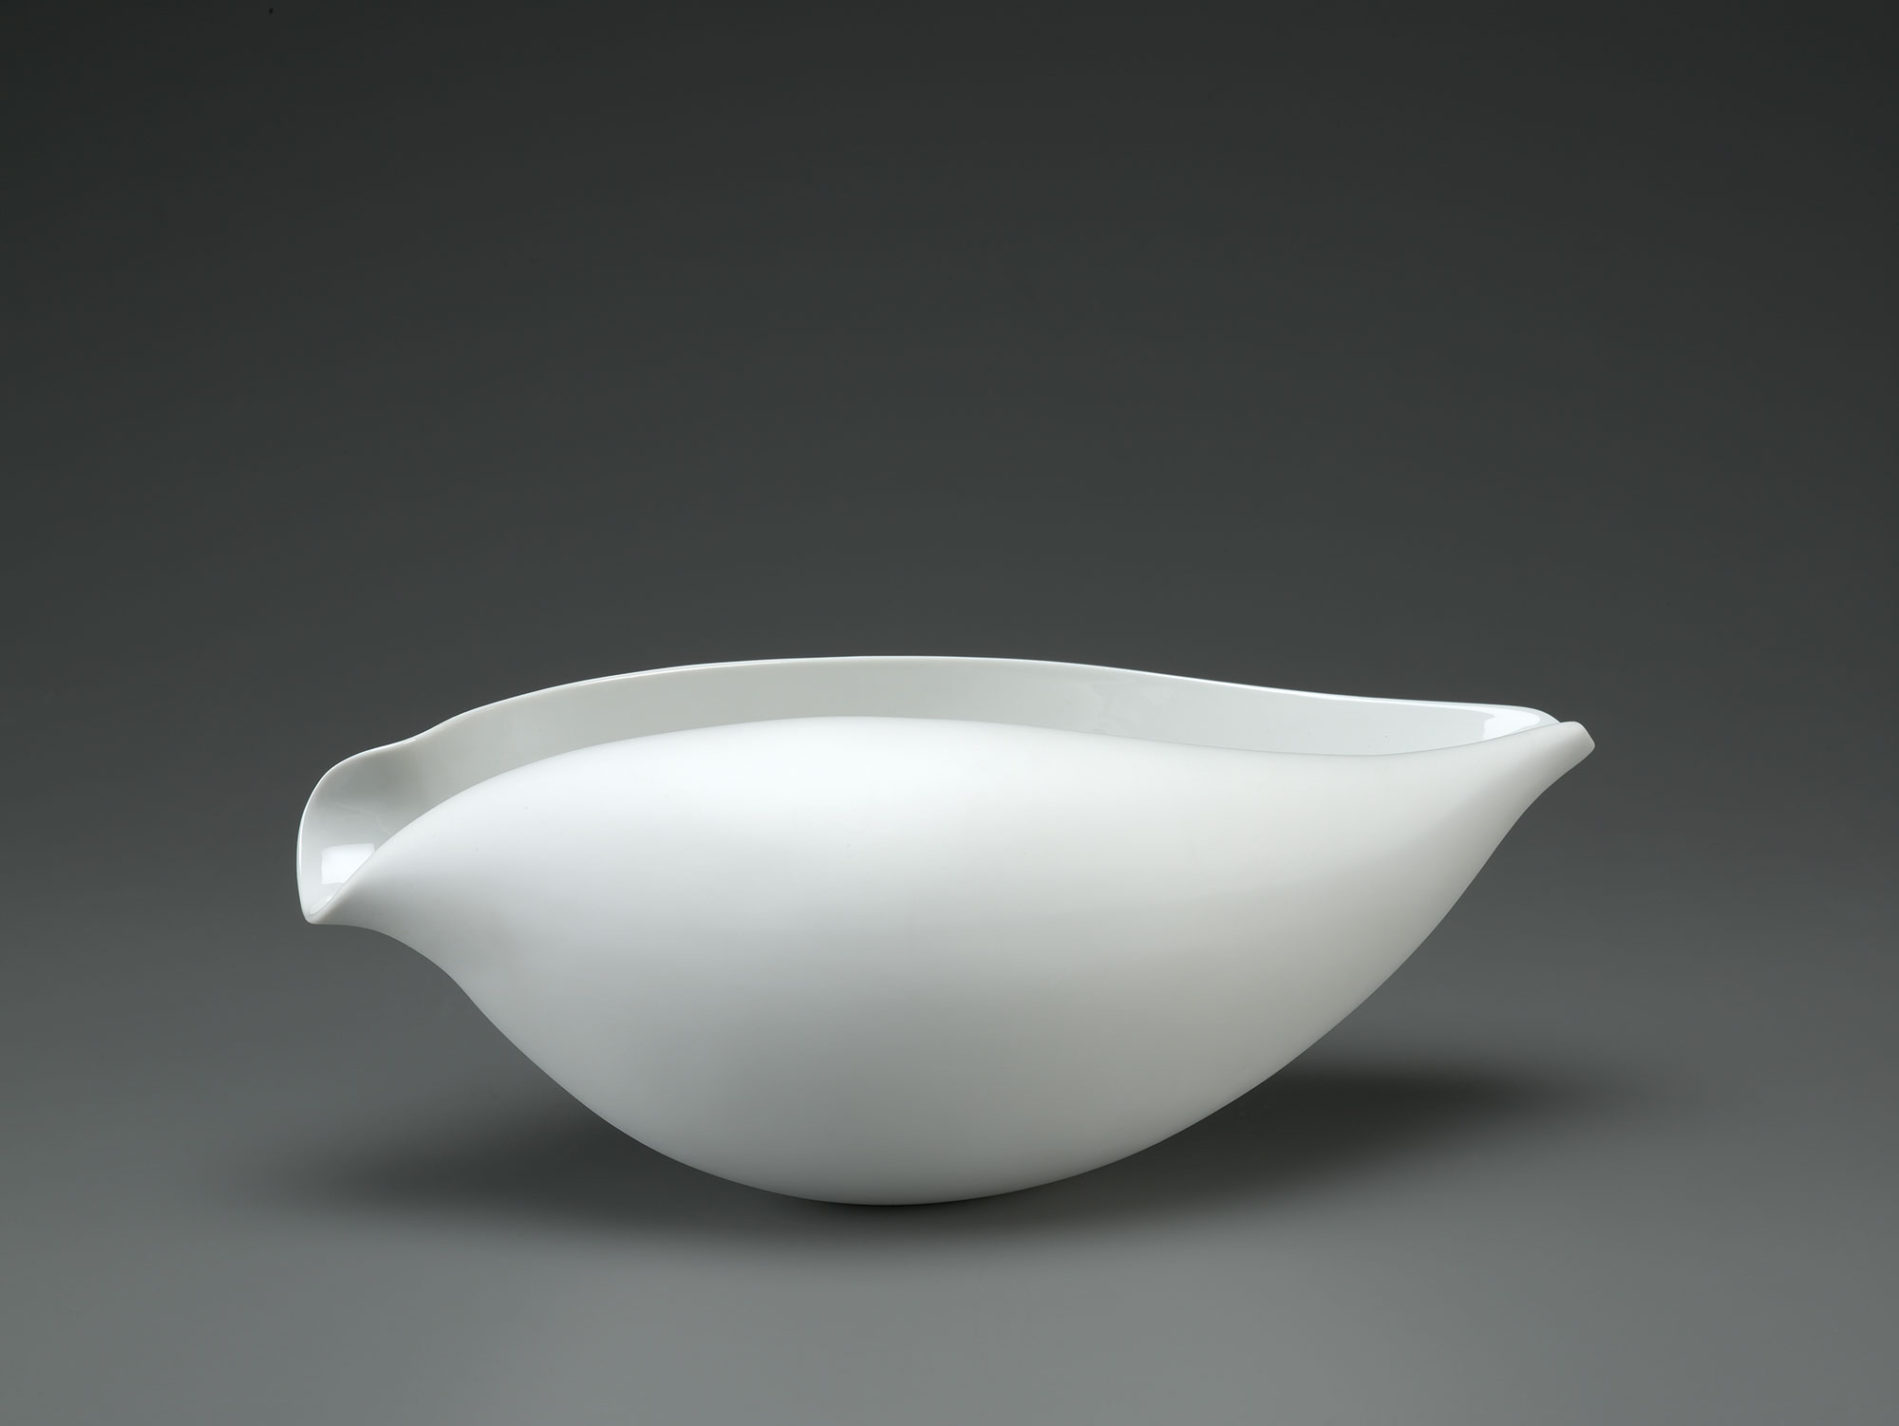 Oblong bowl that curls inward at the top, resembling a seashell.